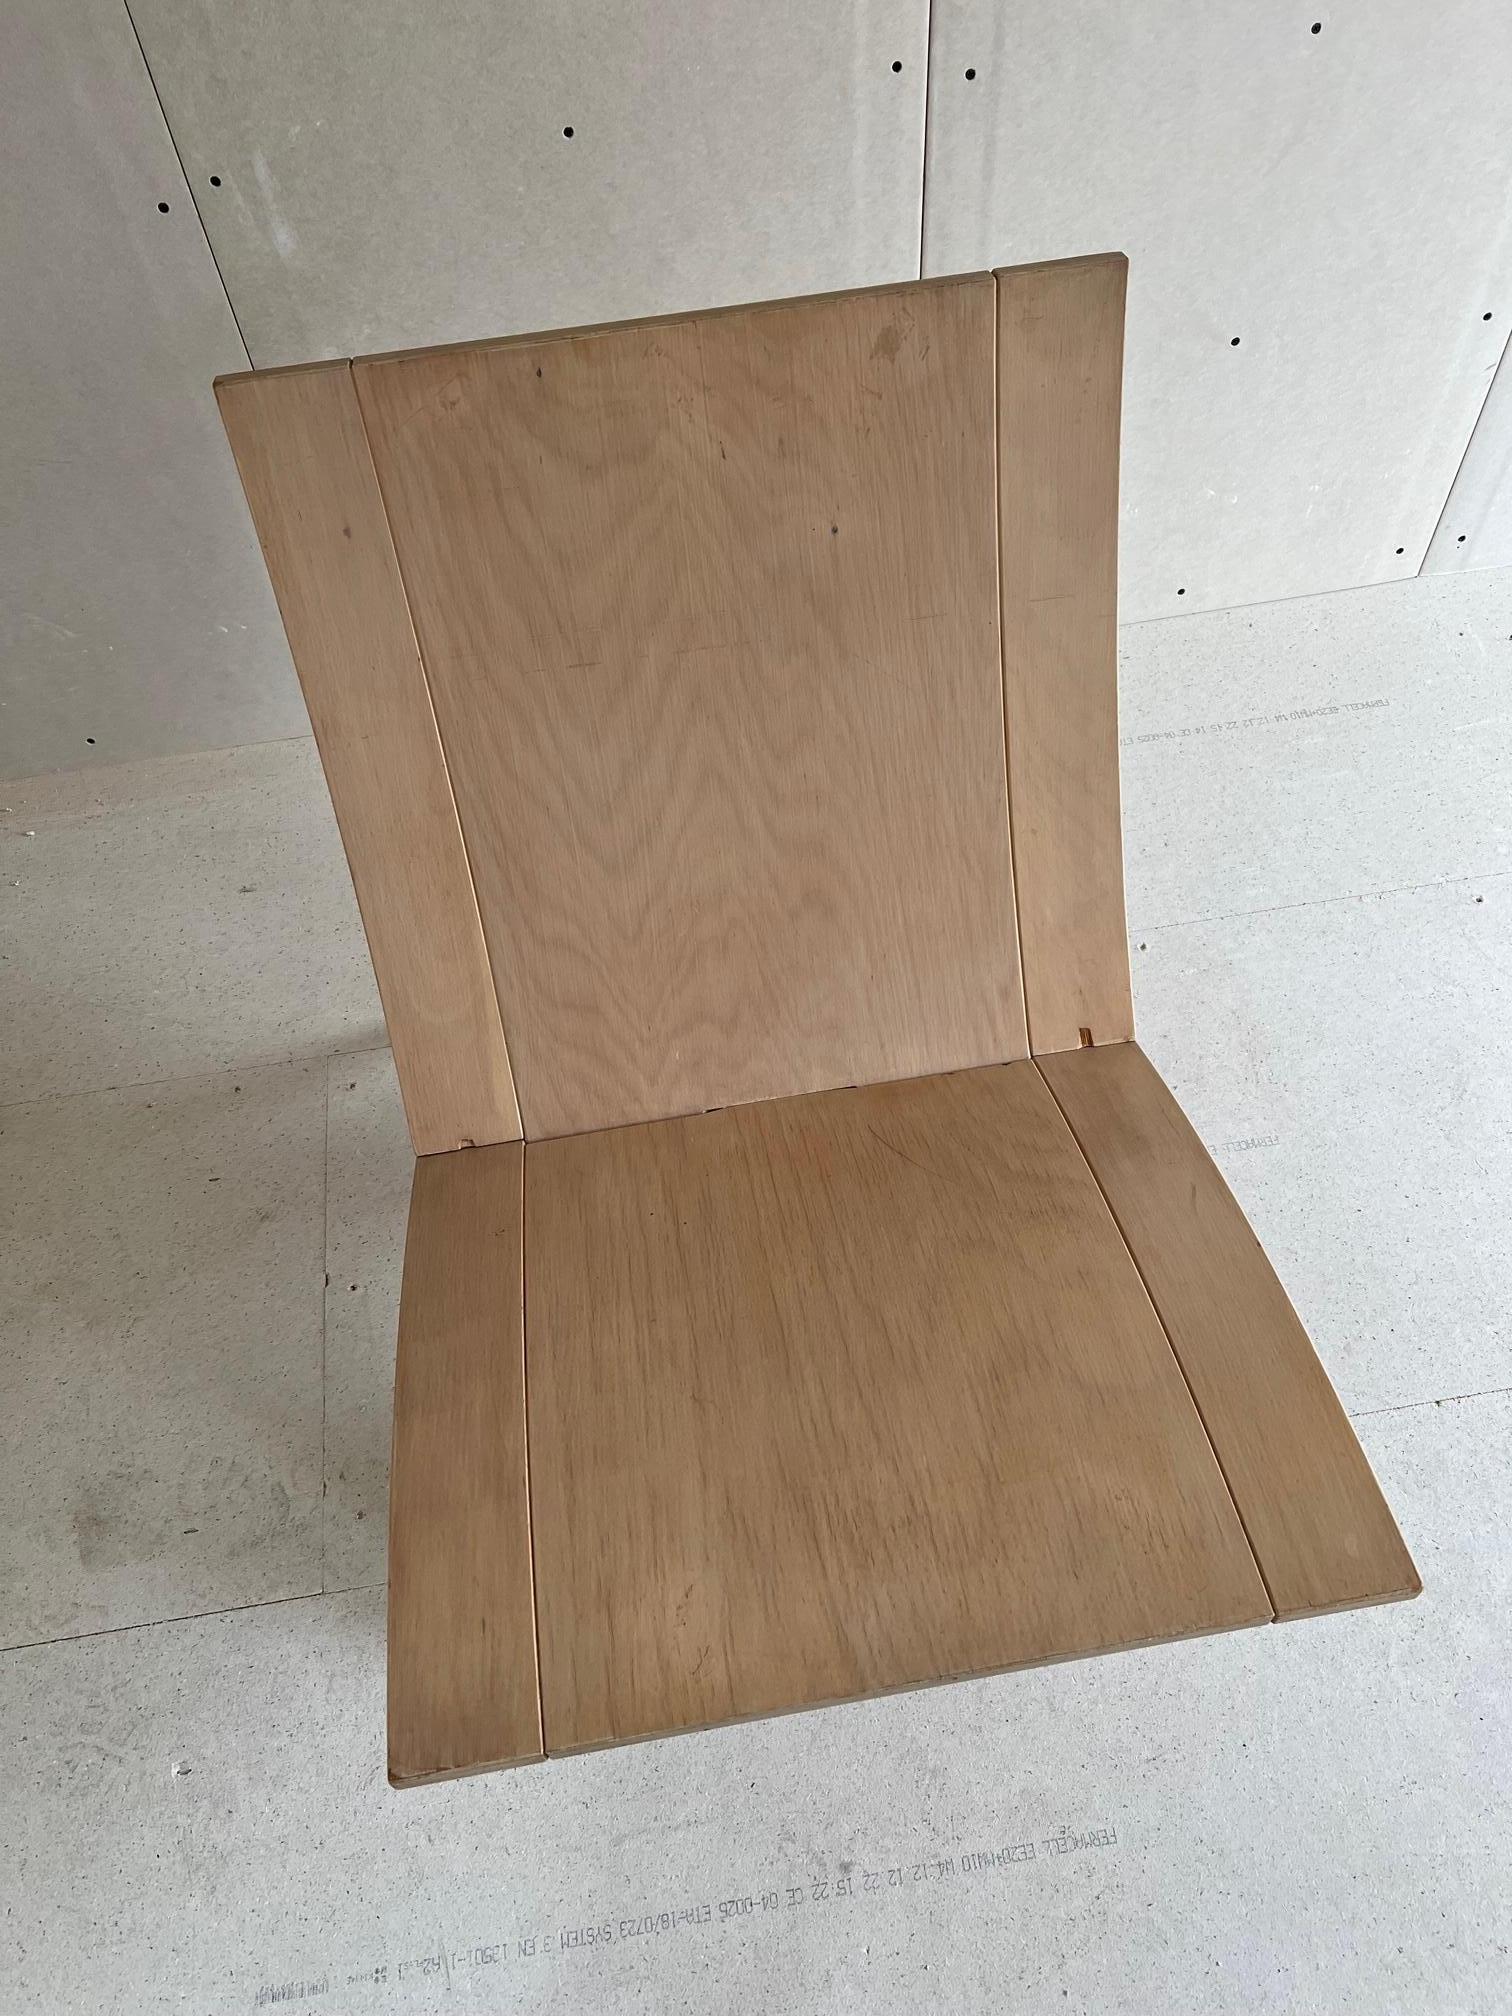 Beechwood 'Laminex' Folding Chair by Jens Nielsen 80s for Falster For Sale 2